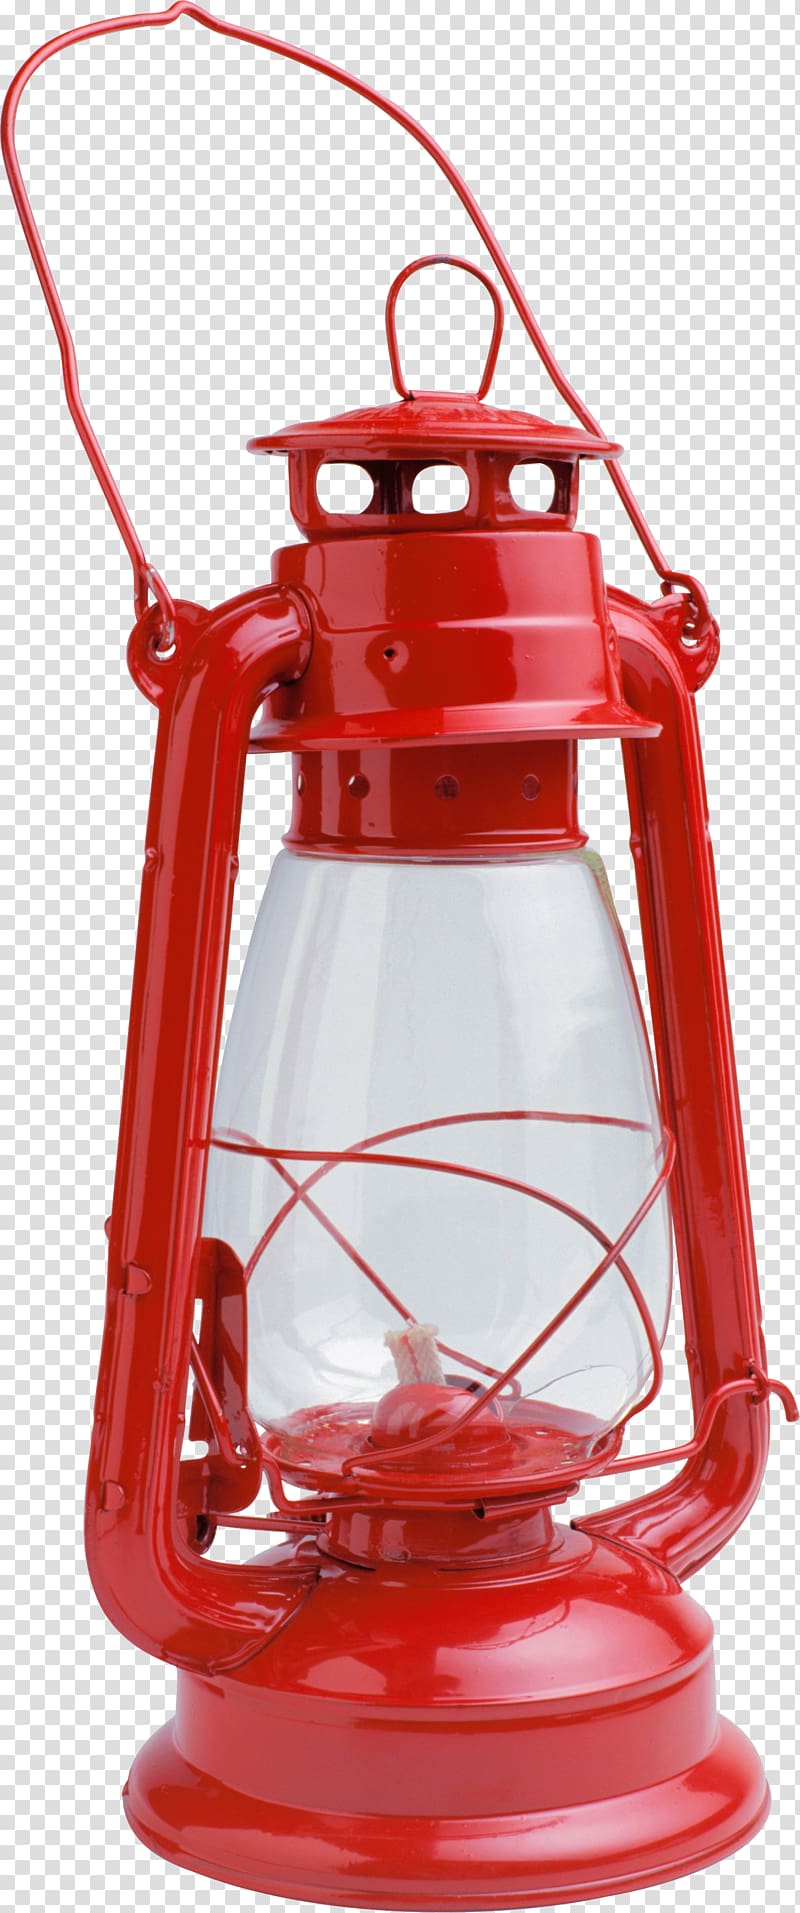 Candle Lantern Kerosene lamp, fire hydrant transparent background PNG clipart